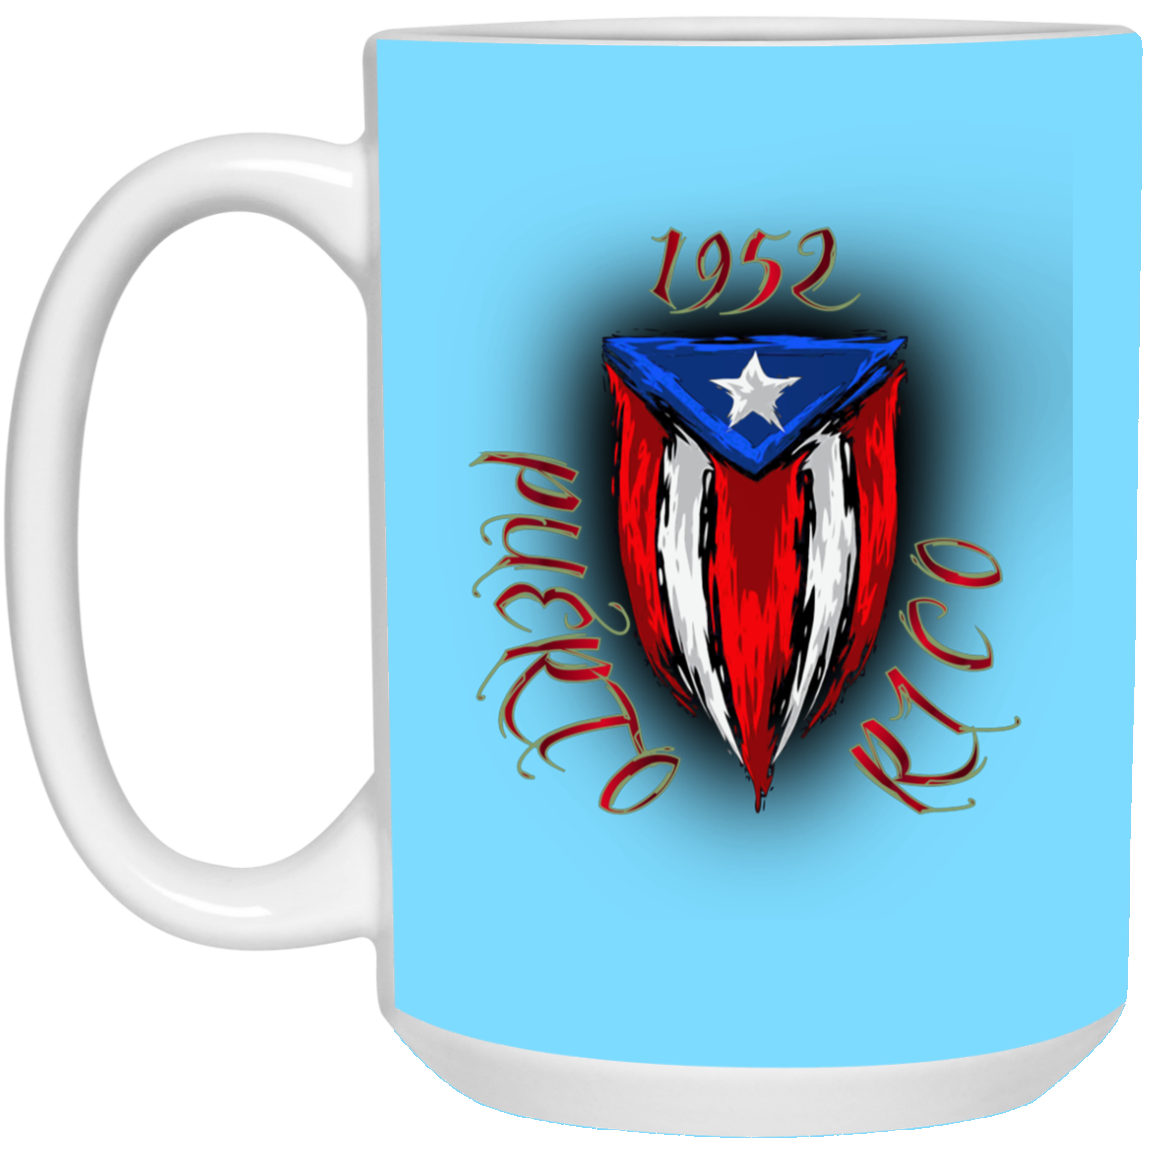 1952 Puerto Rico 15 oz. White Mug